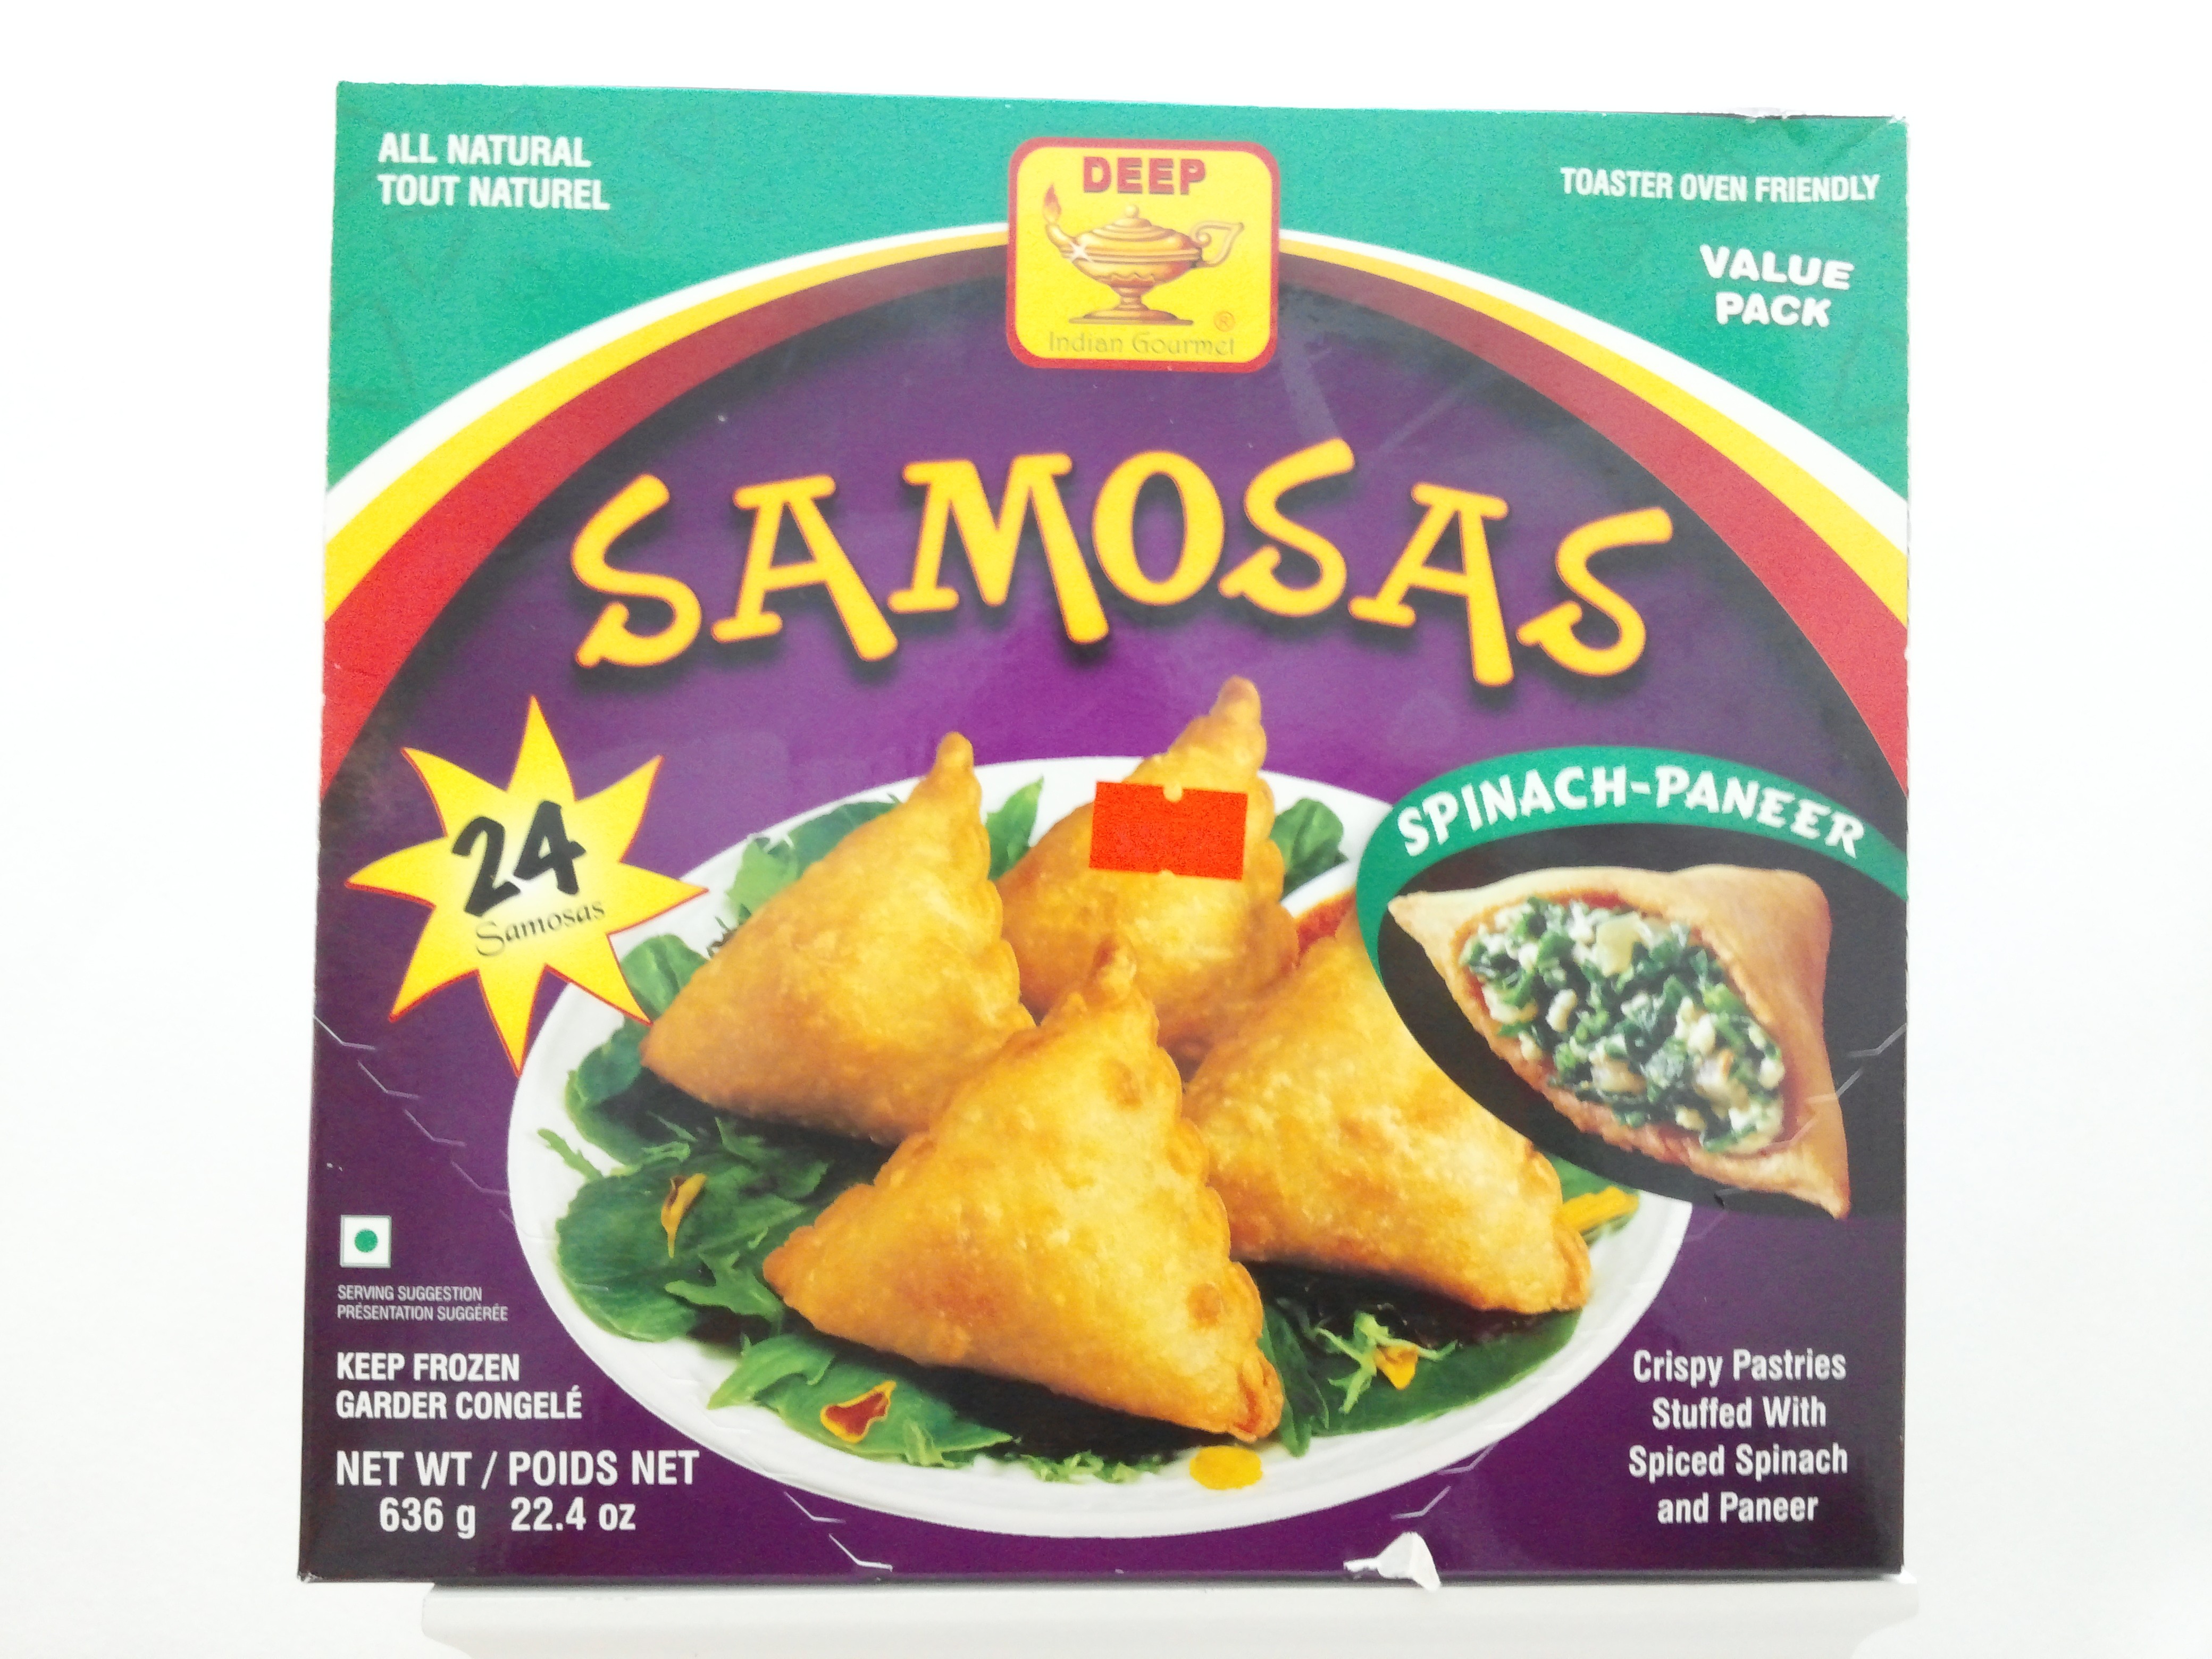 Deep Samosas Spinach-Paneer 24 pcs 22.4 oz 